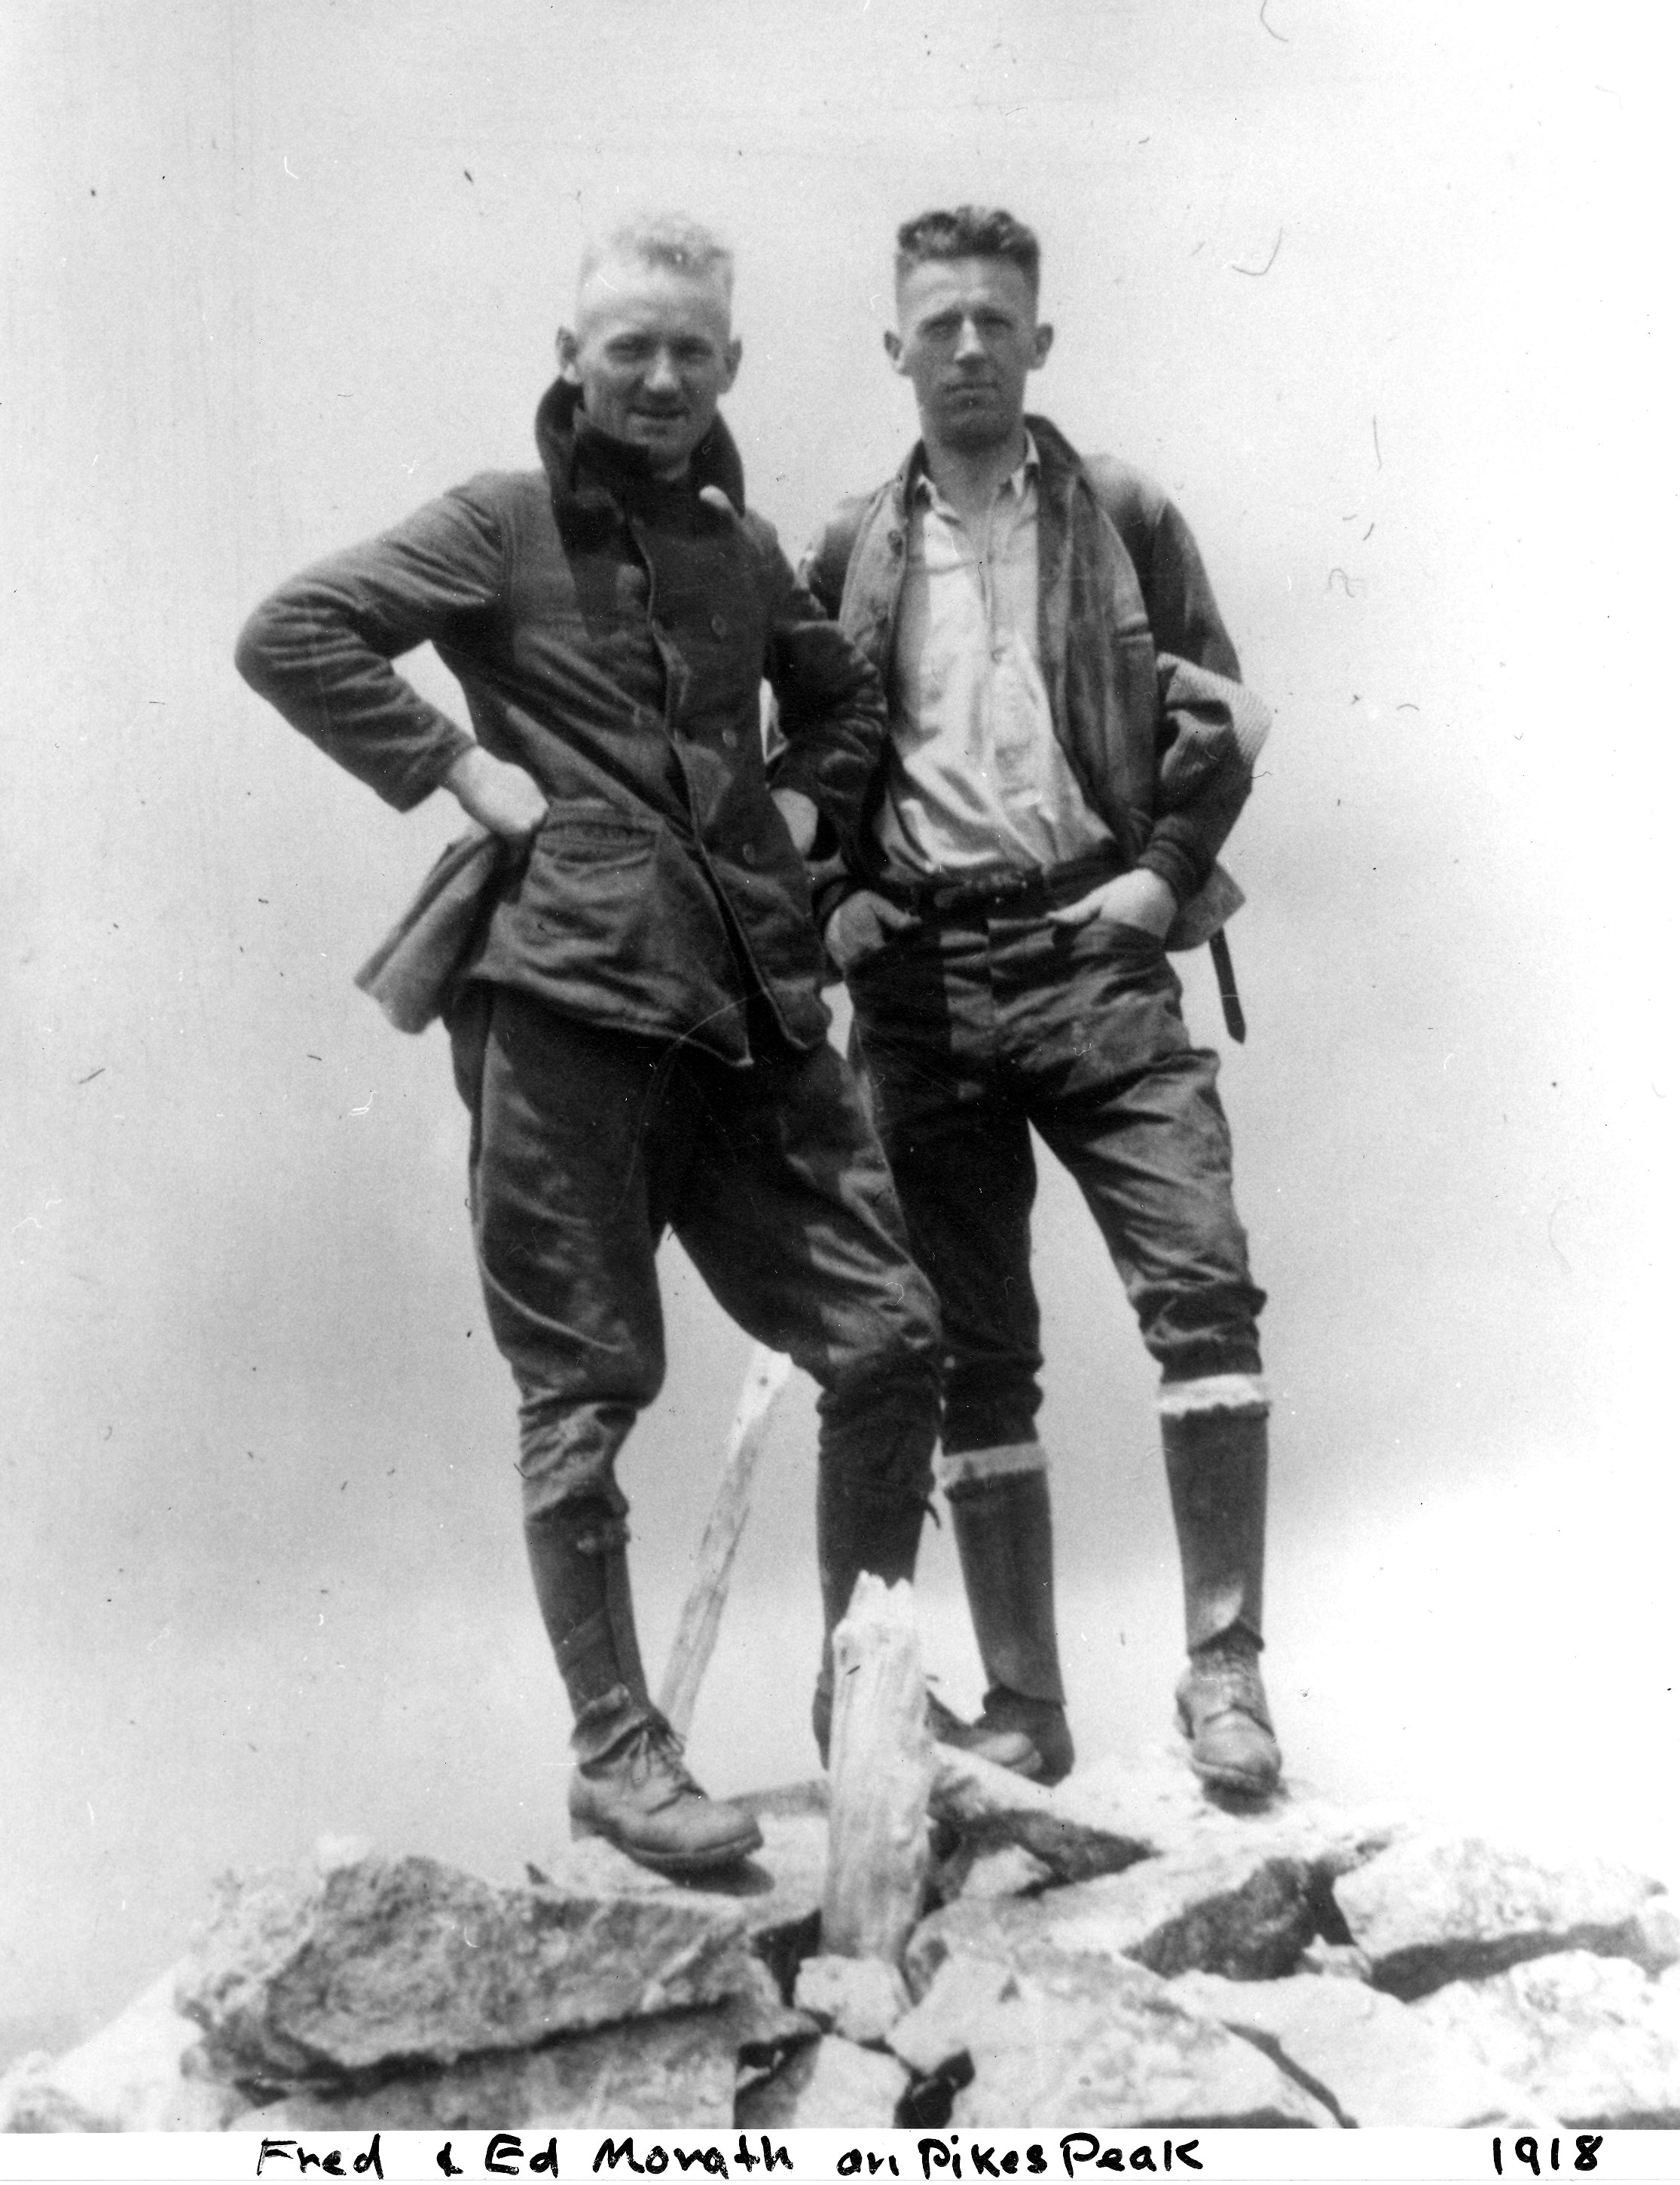 Fred and Ed Morath on Pikes Peak 1918, Pioneers Museum